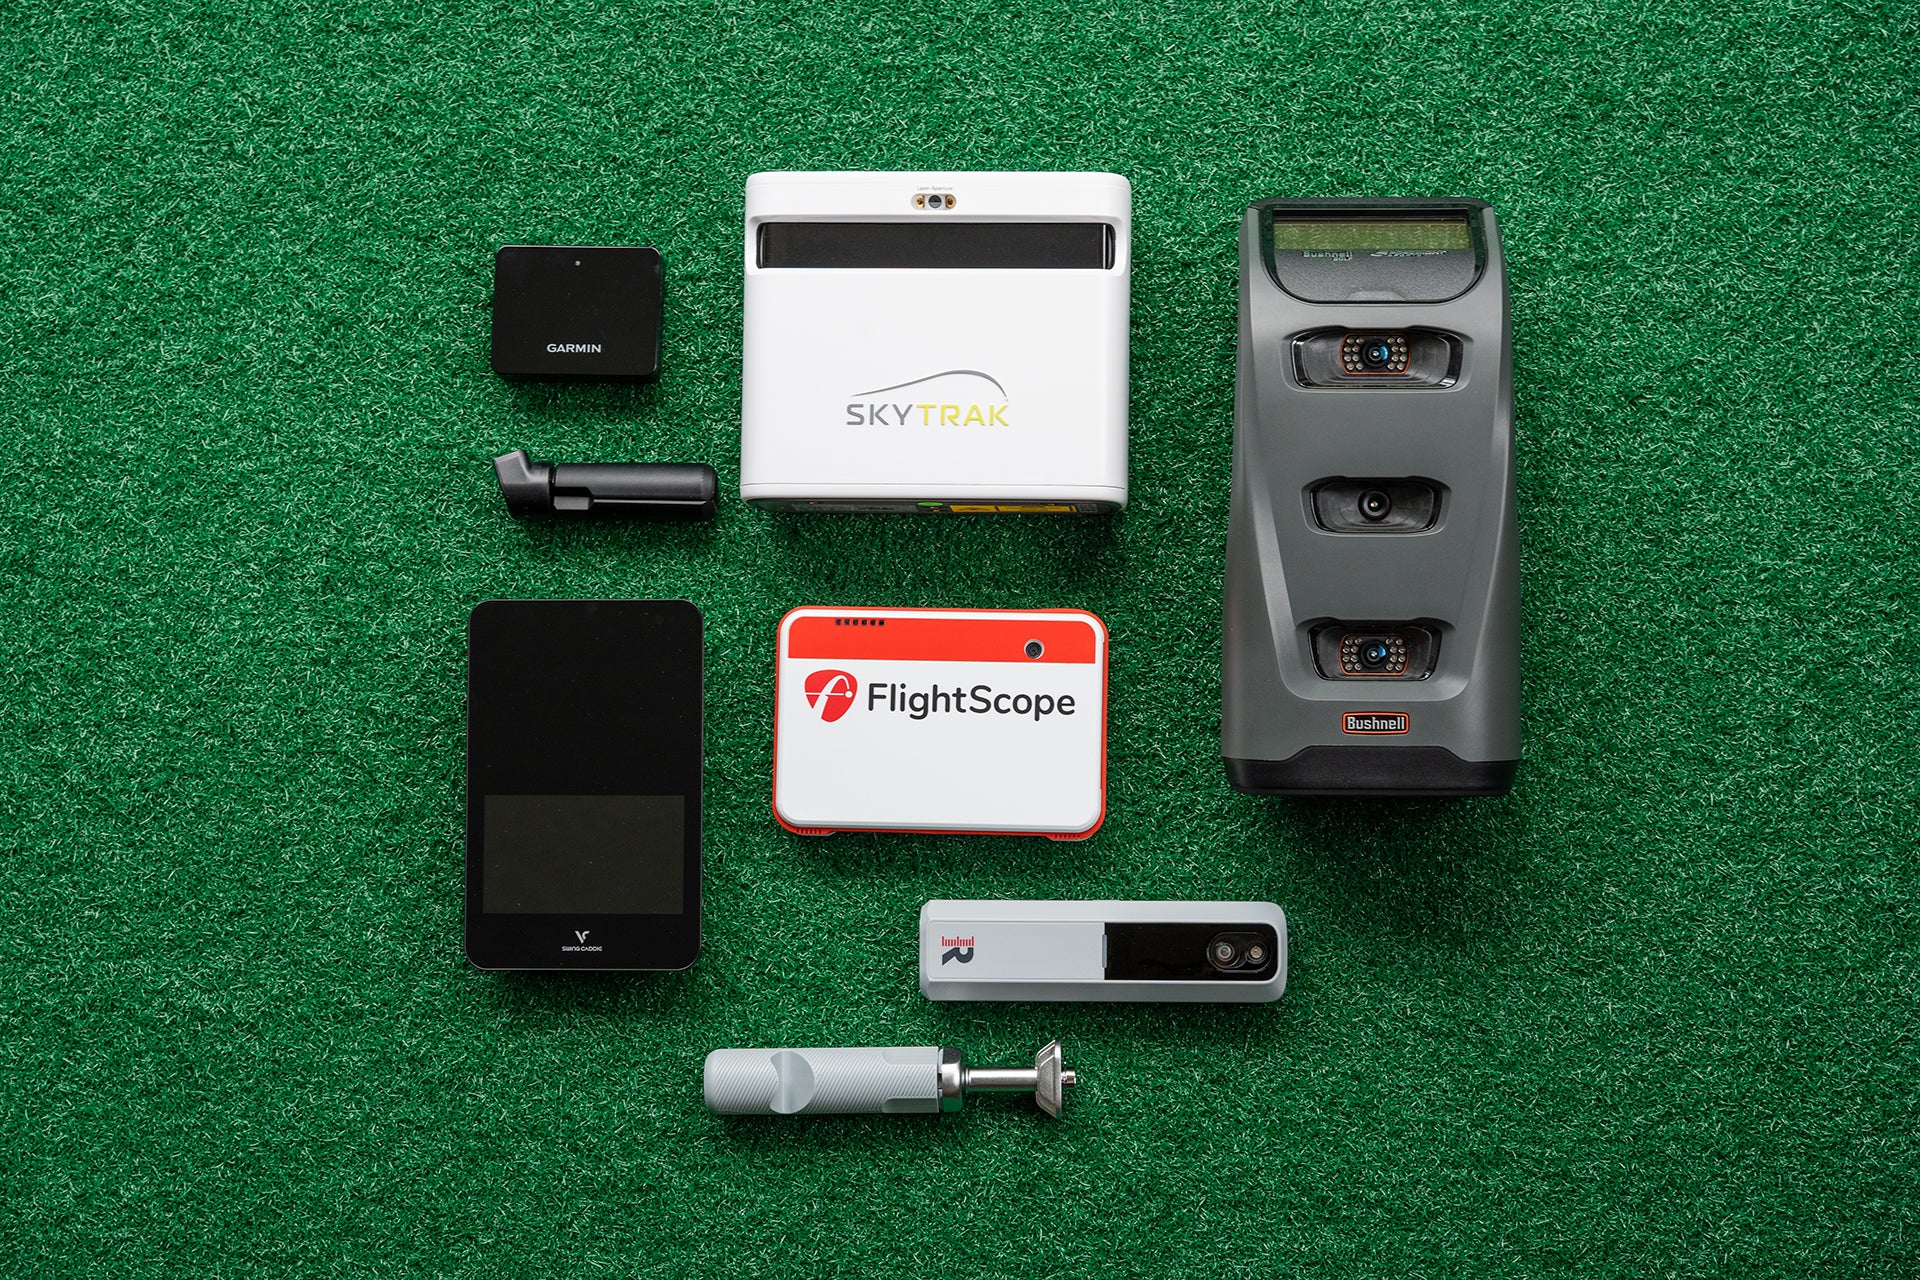 Several PlayBetter golf launch monitors—SkyTrak+, Bushnell Launch Pro, Swing Caddie SC4, Rapsodo MLM2PRO, FlightScope Mevo+ and Garmin Approach R10 picture flat on green turf